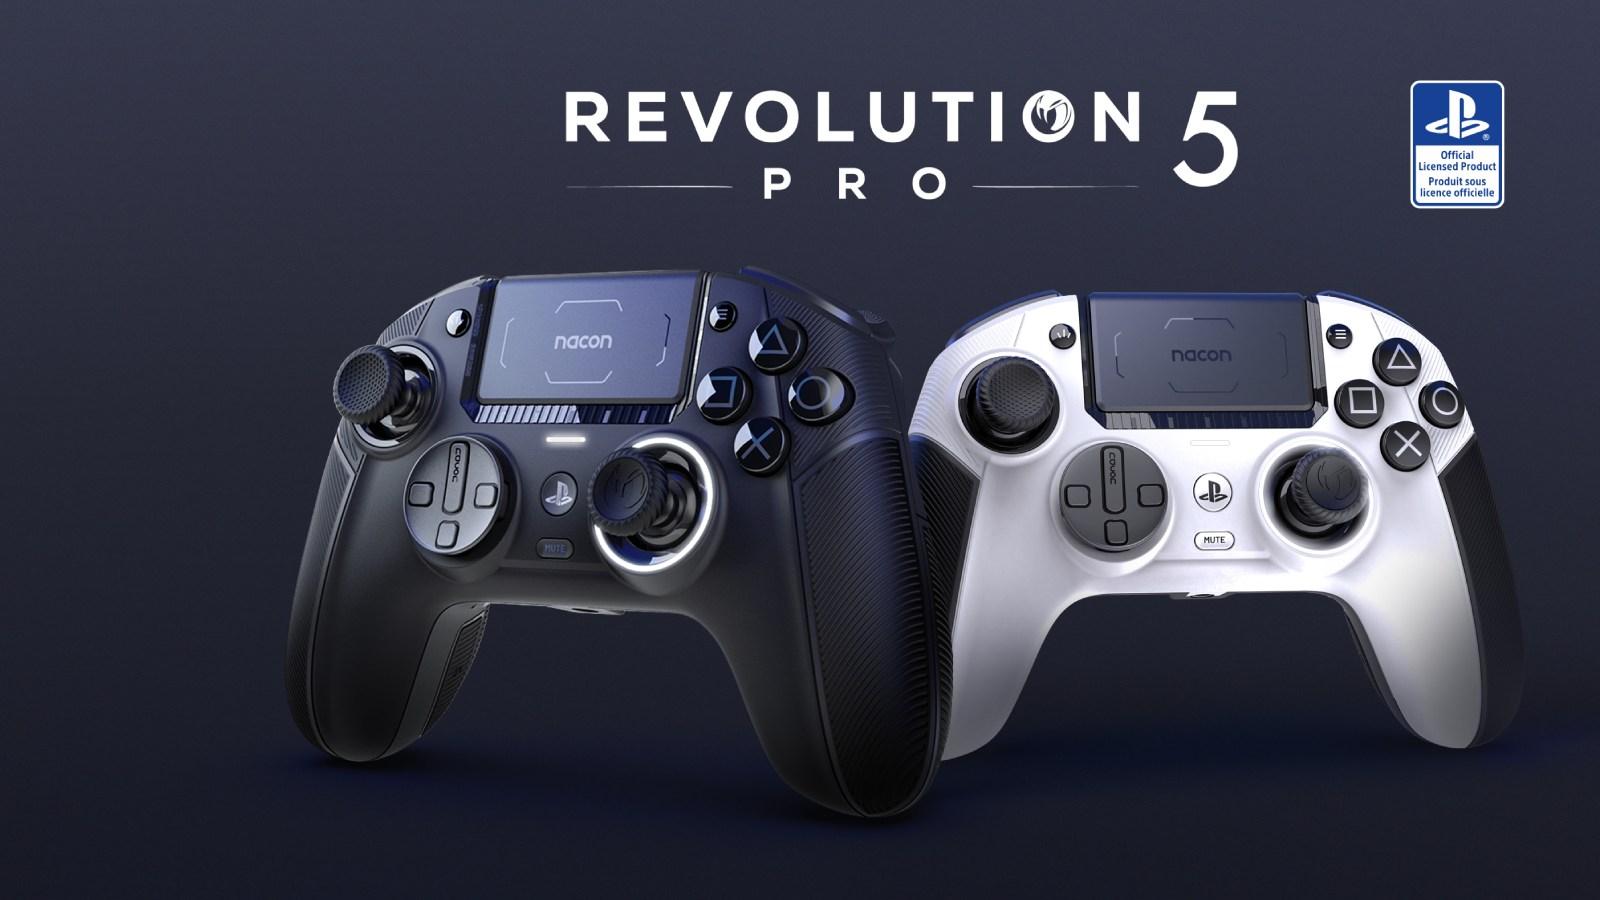 Nacon Revolution 5 pro controller in black and white